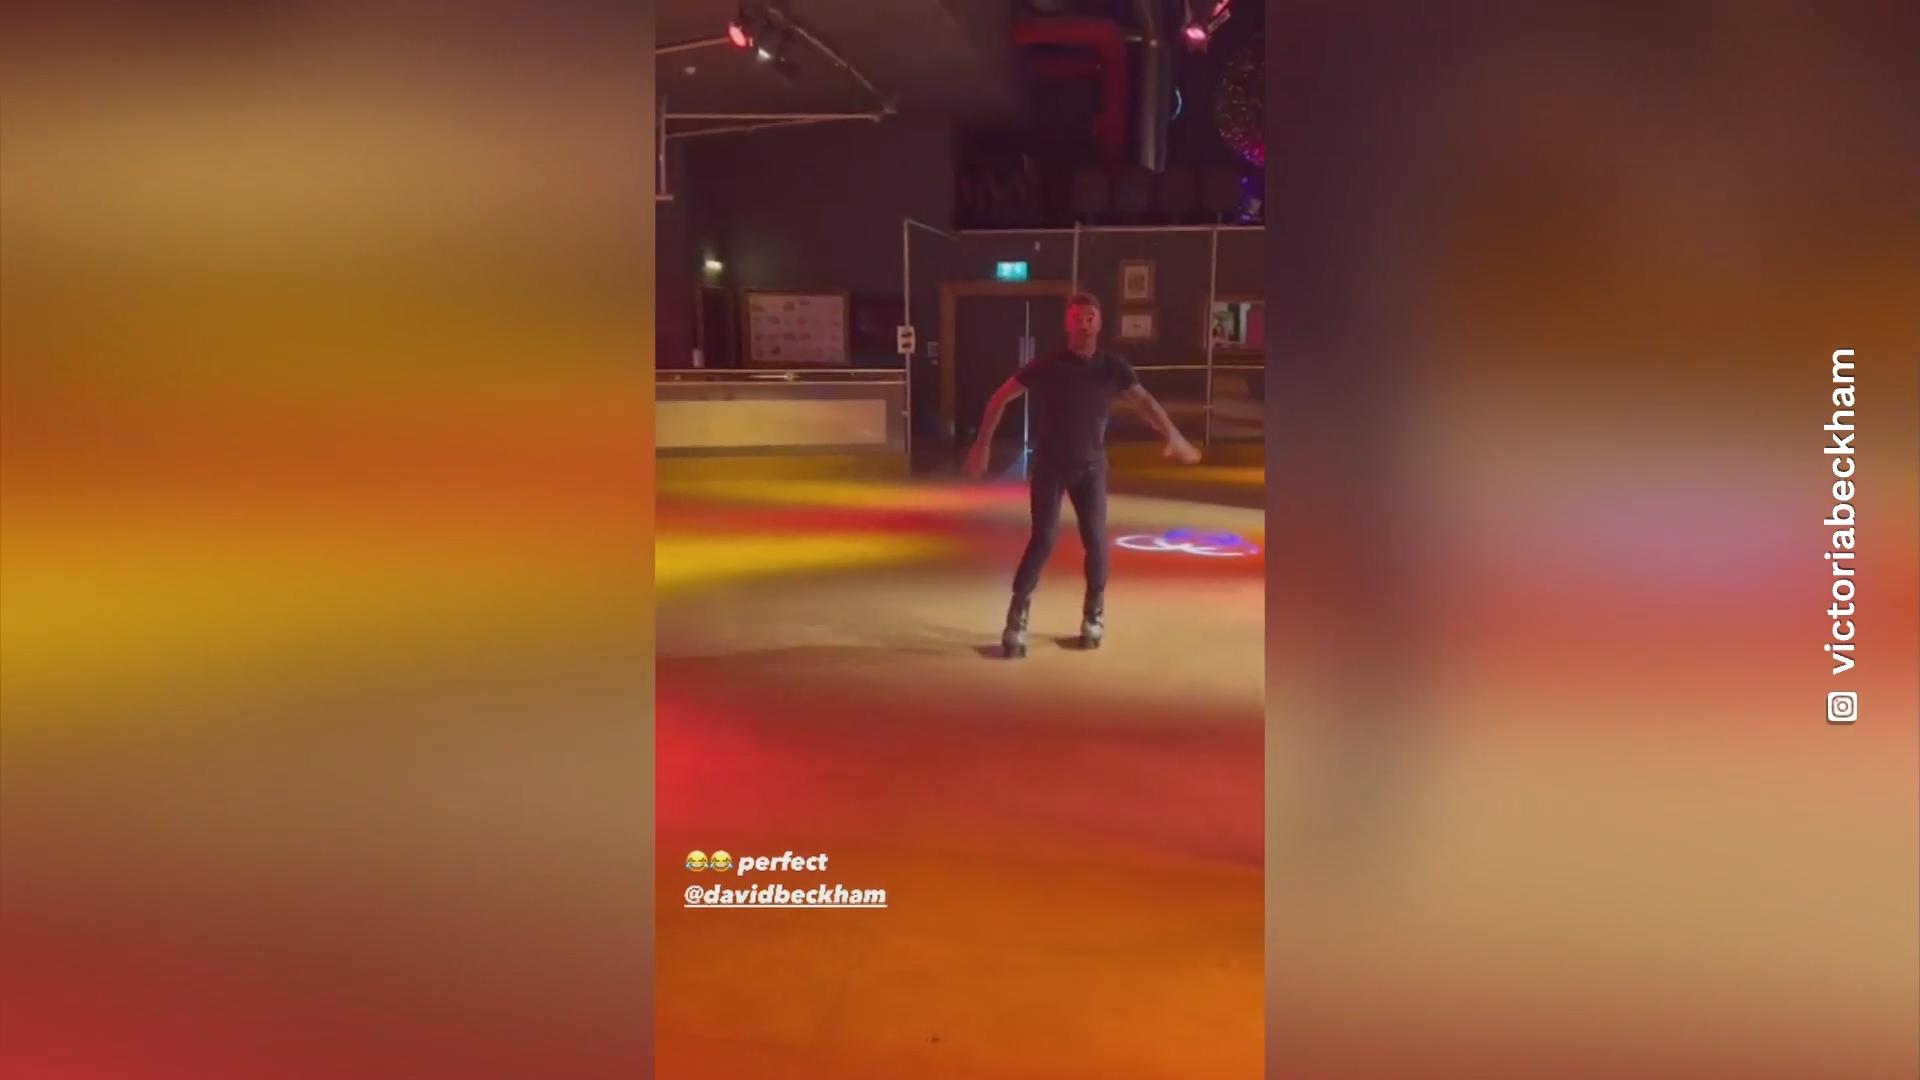 David Beckham trains on roller skates Victoria films everything